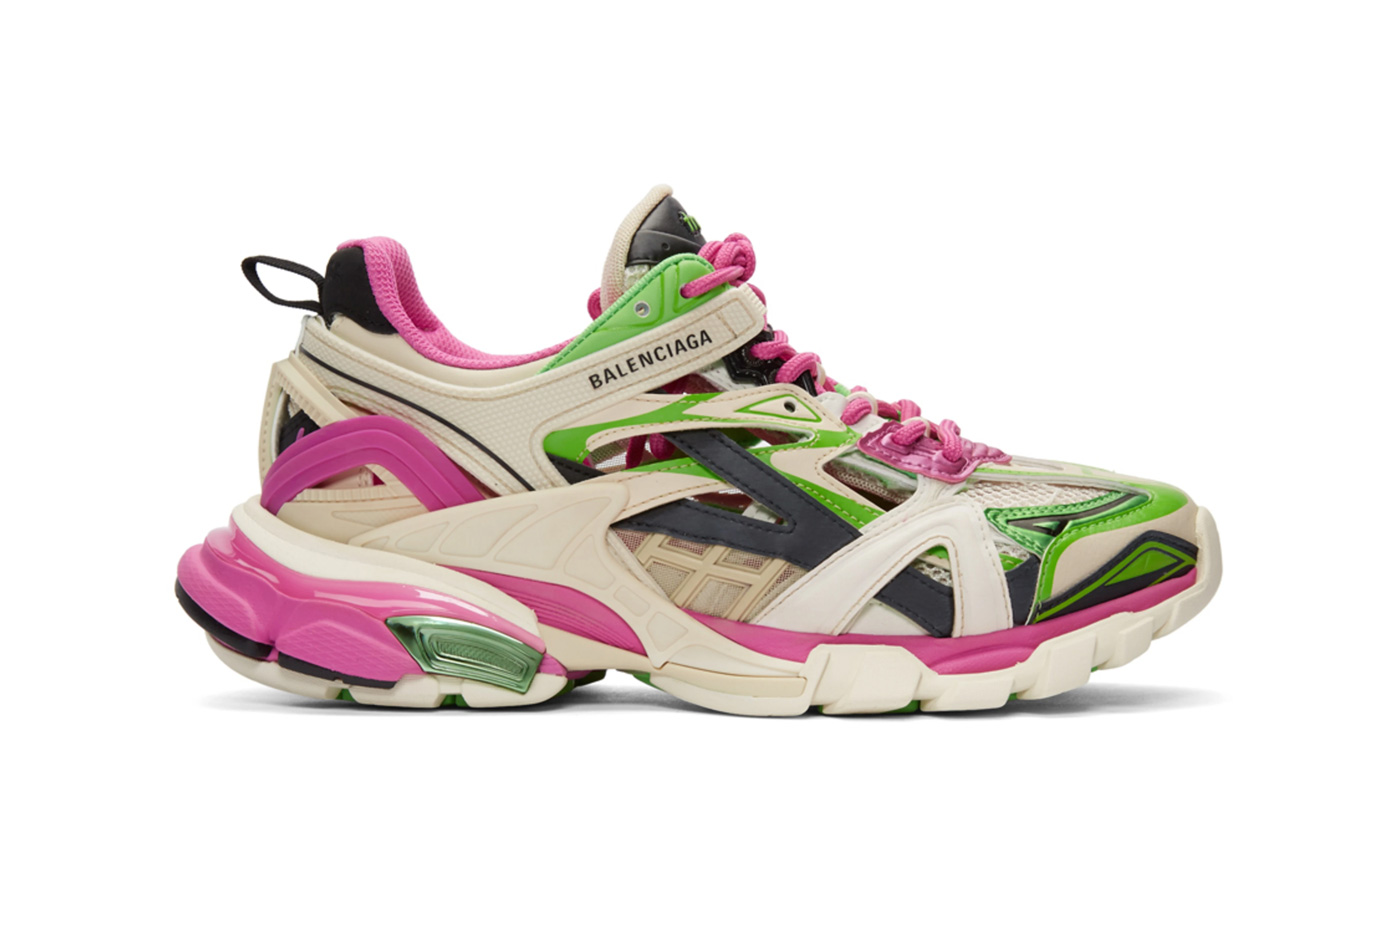 pink balenciaga track sneakers